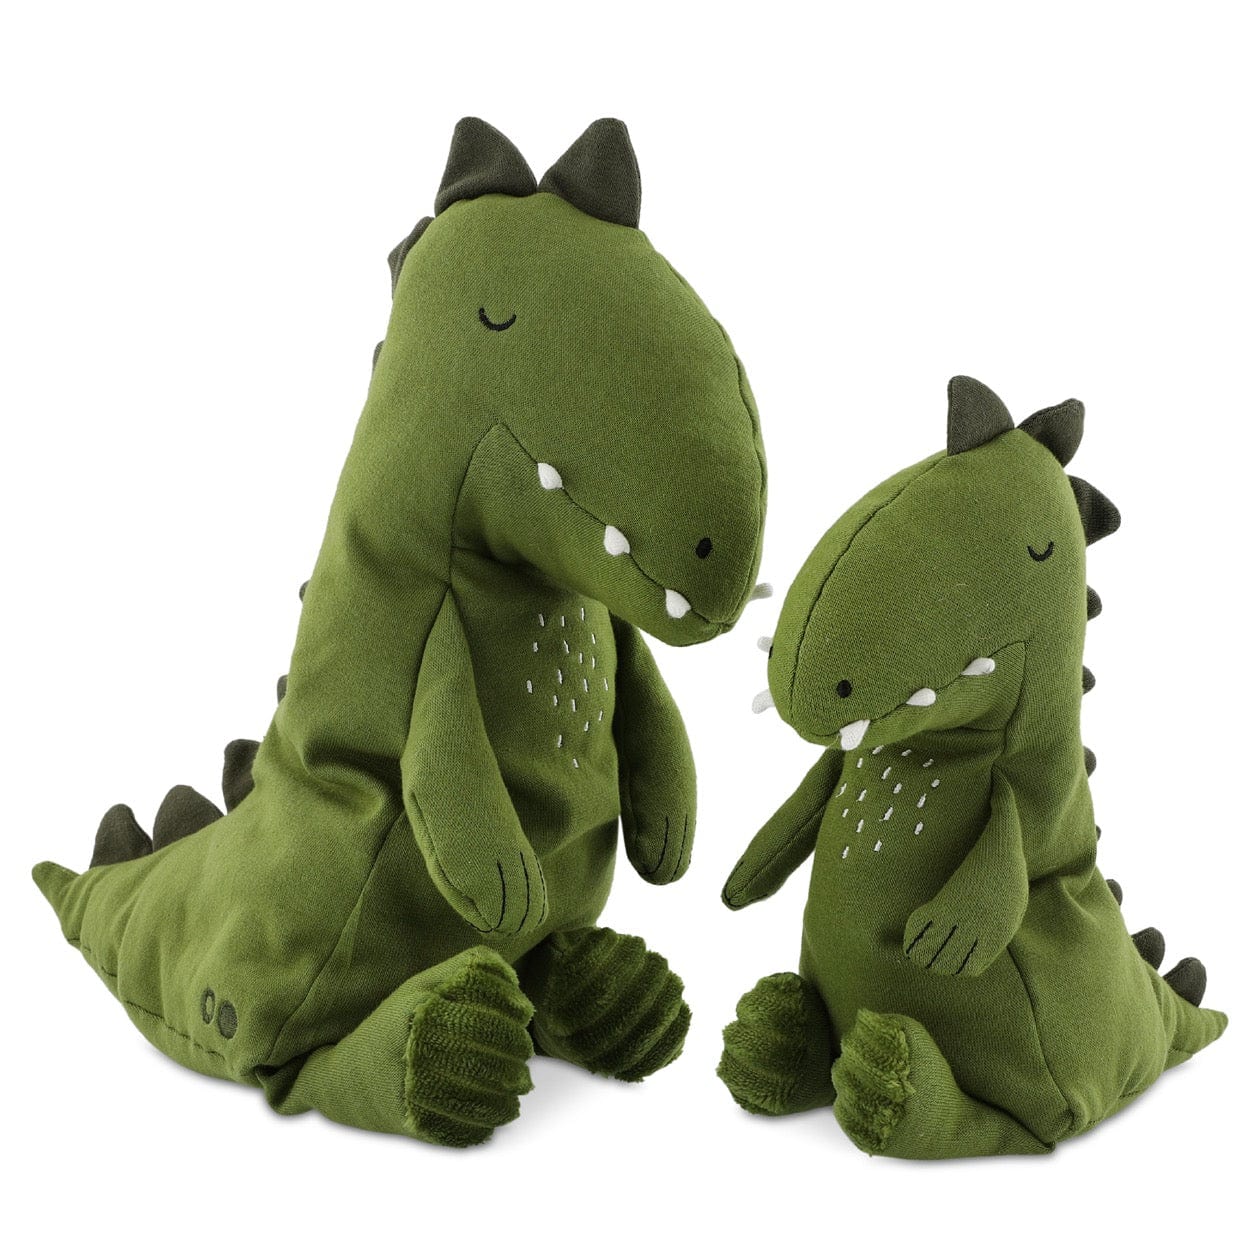 Plush Toy Small - Mr Dino